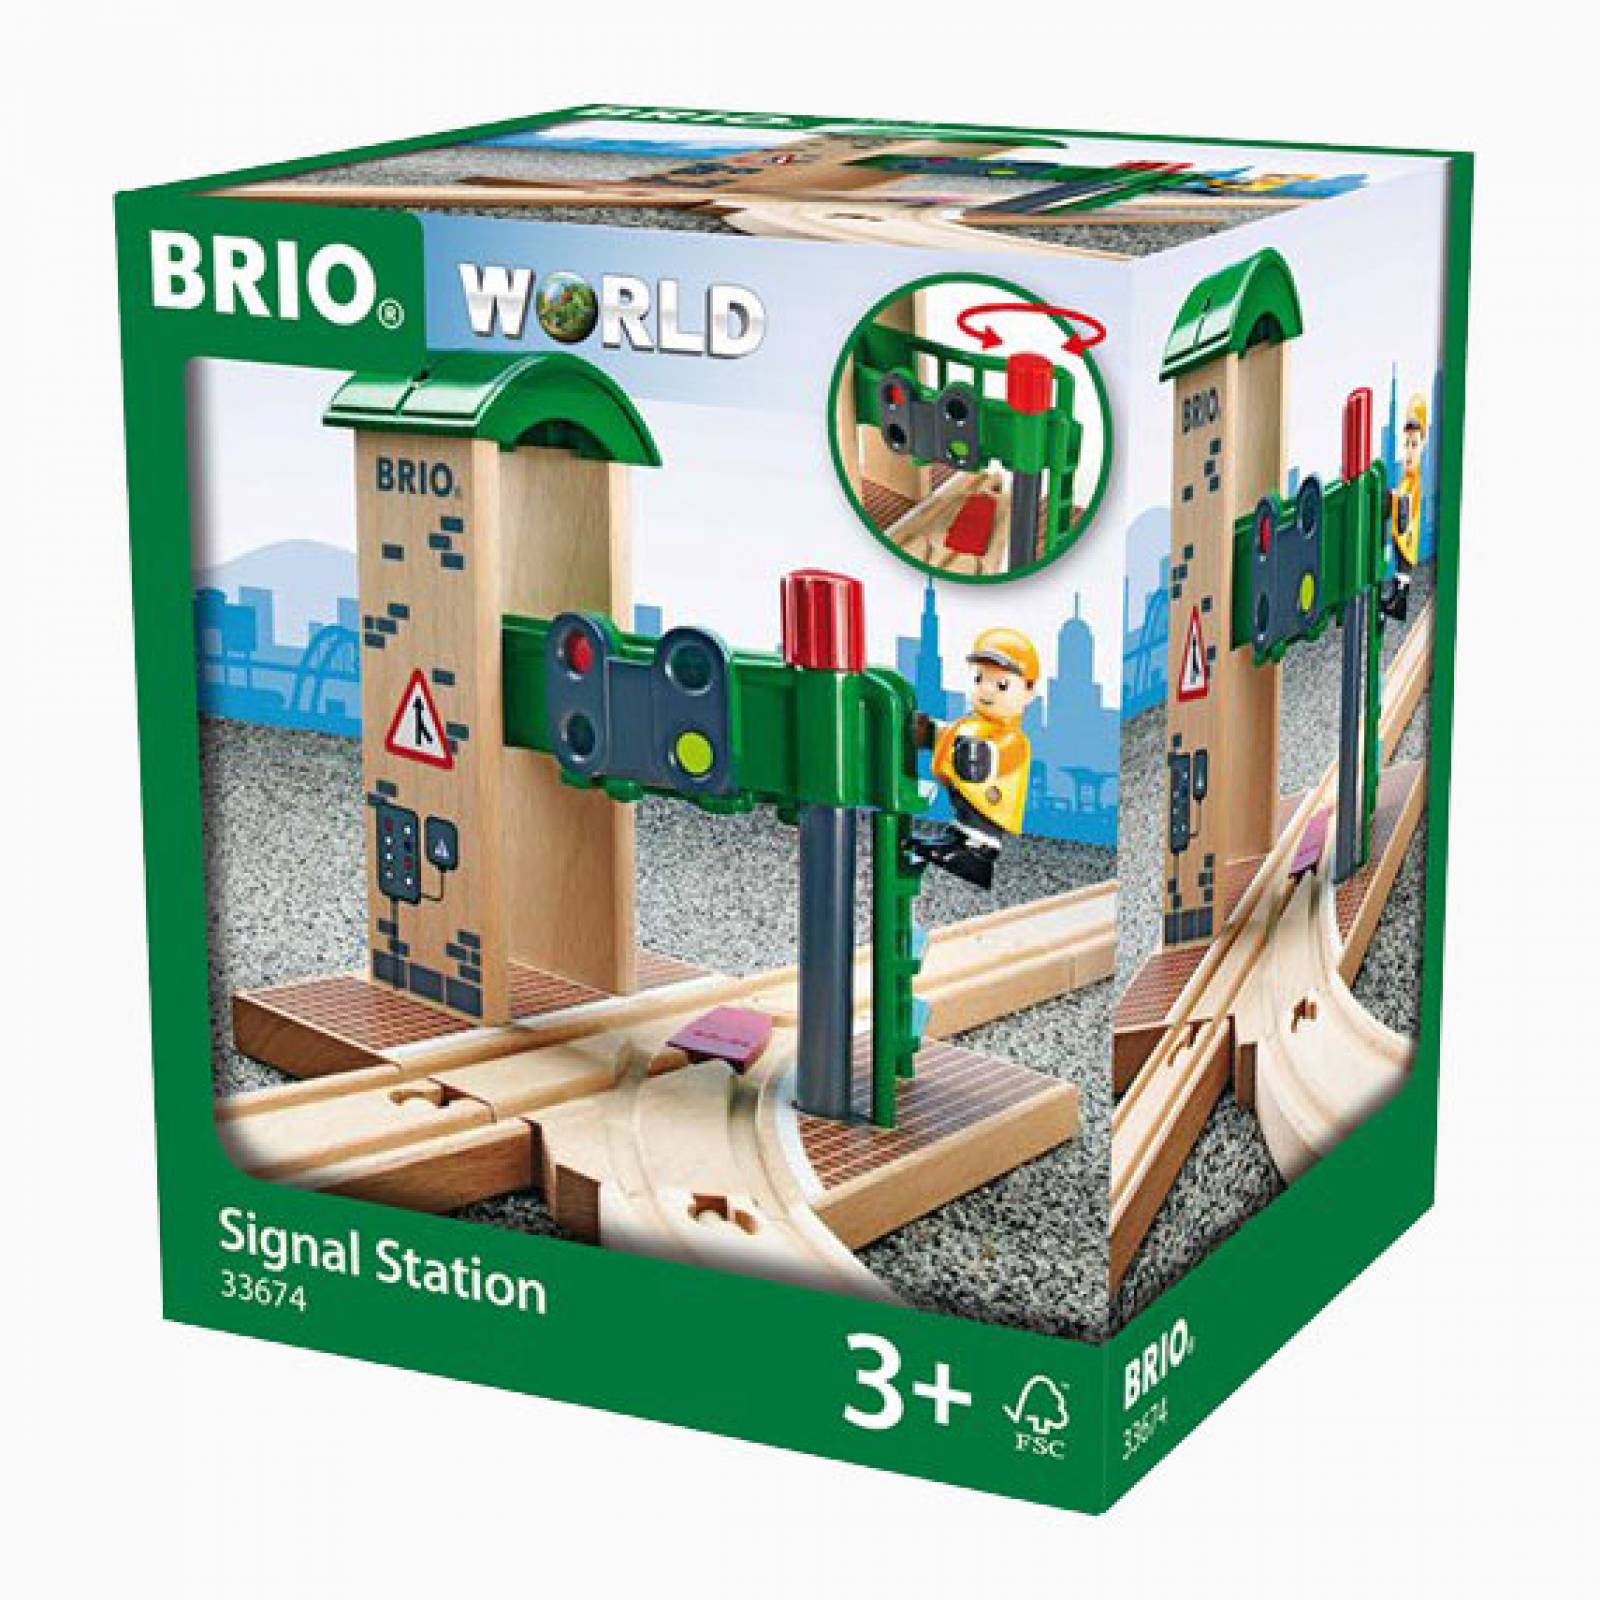 BRIO® Signal Station 3+ thumbnails